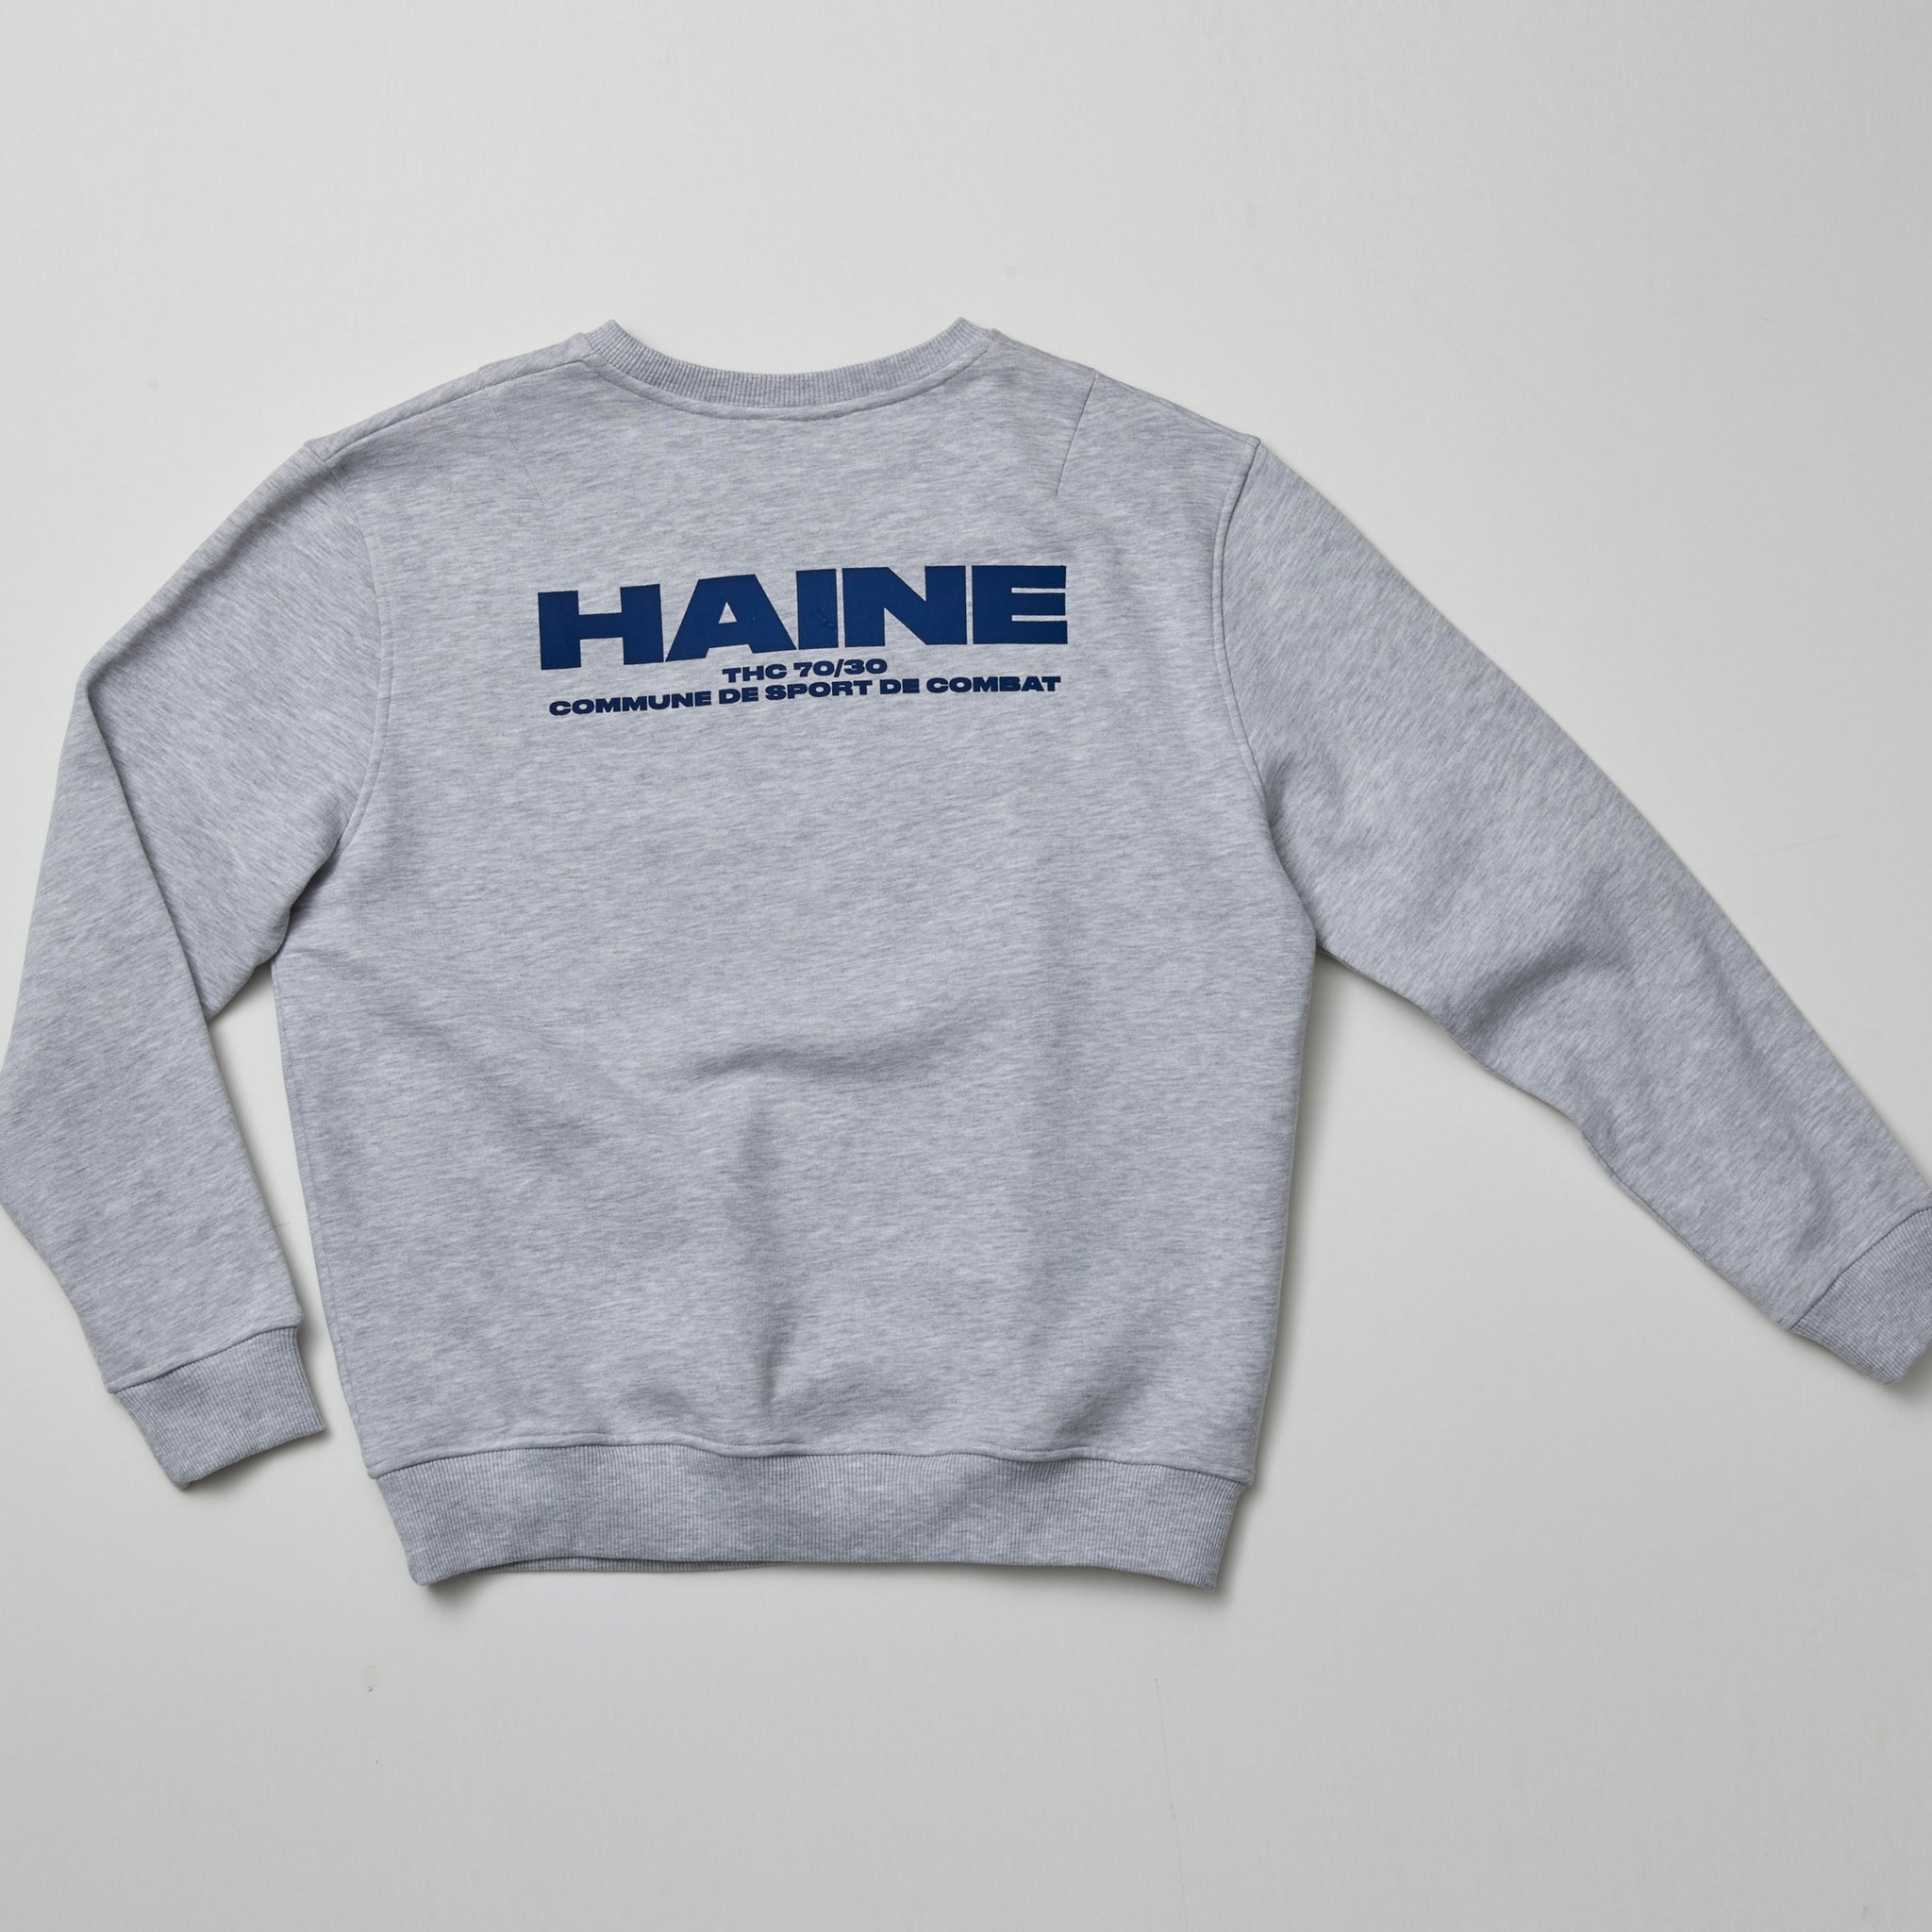 HAINE Sweater back Print